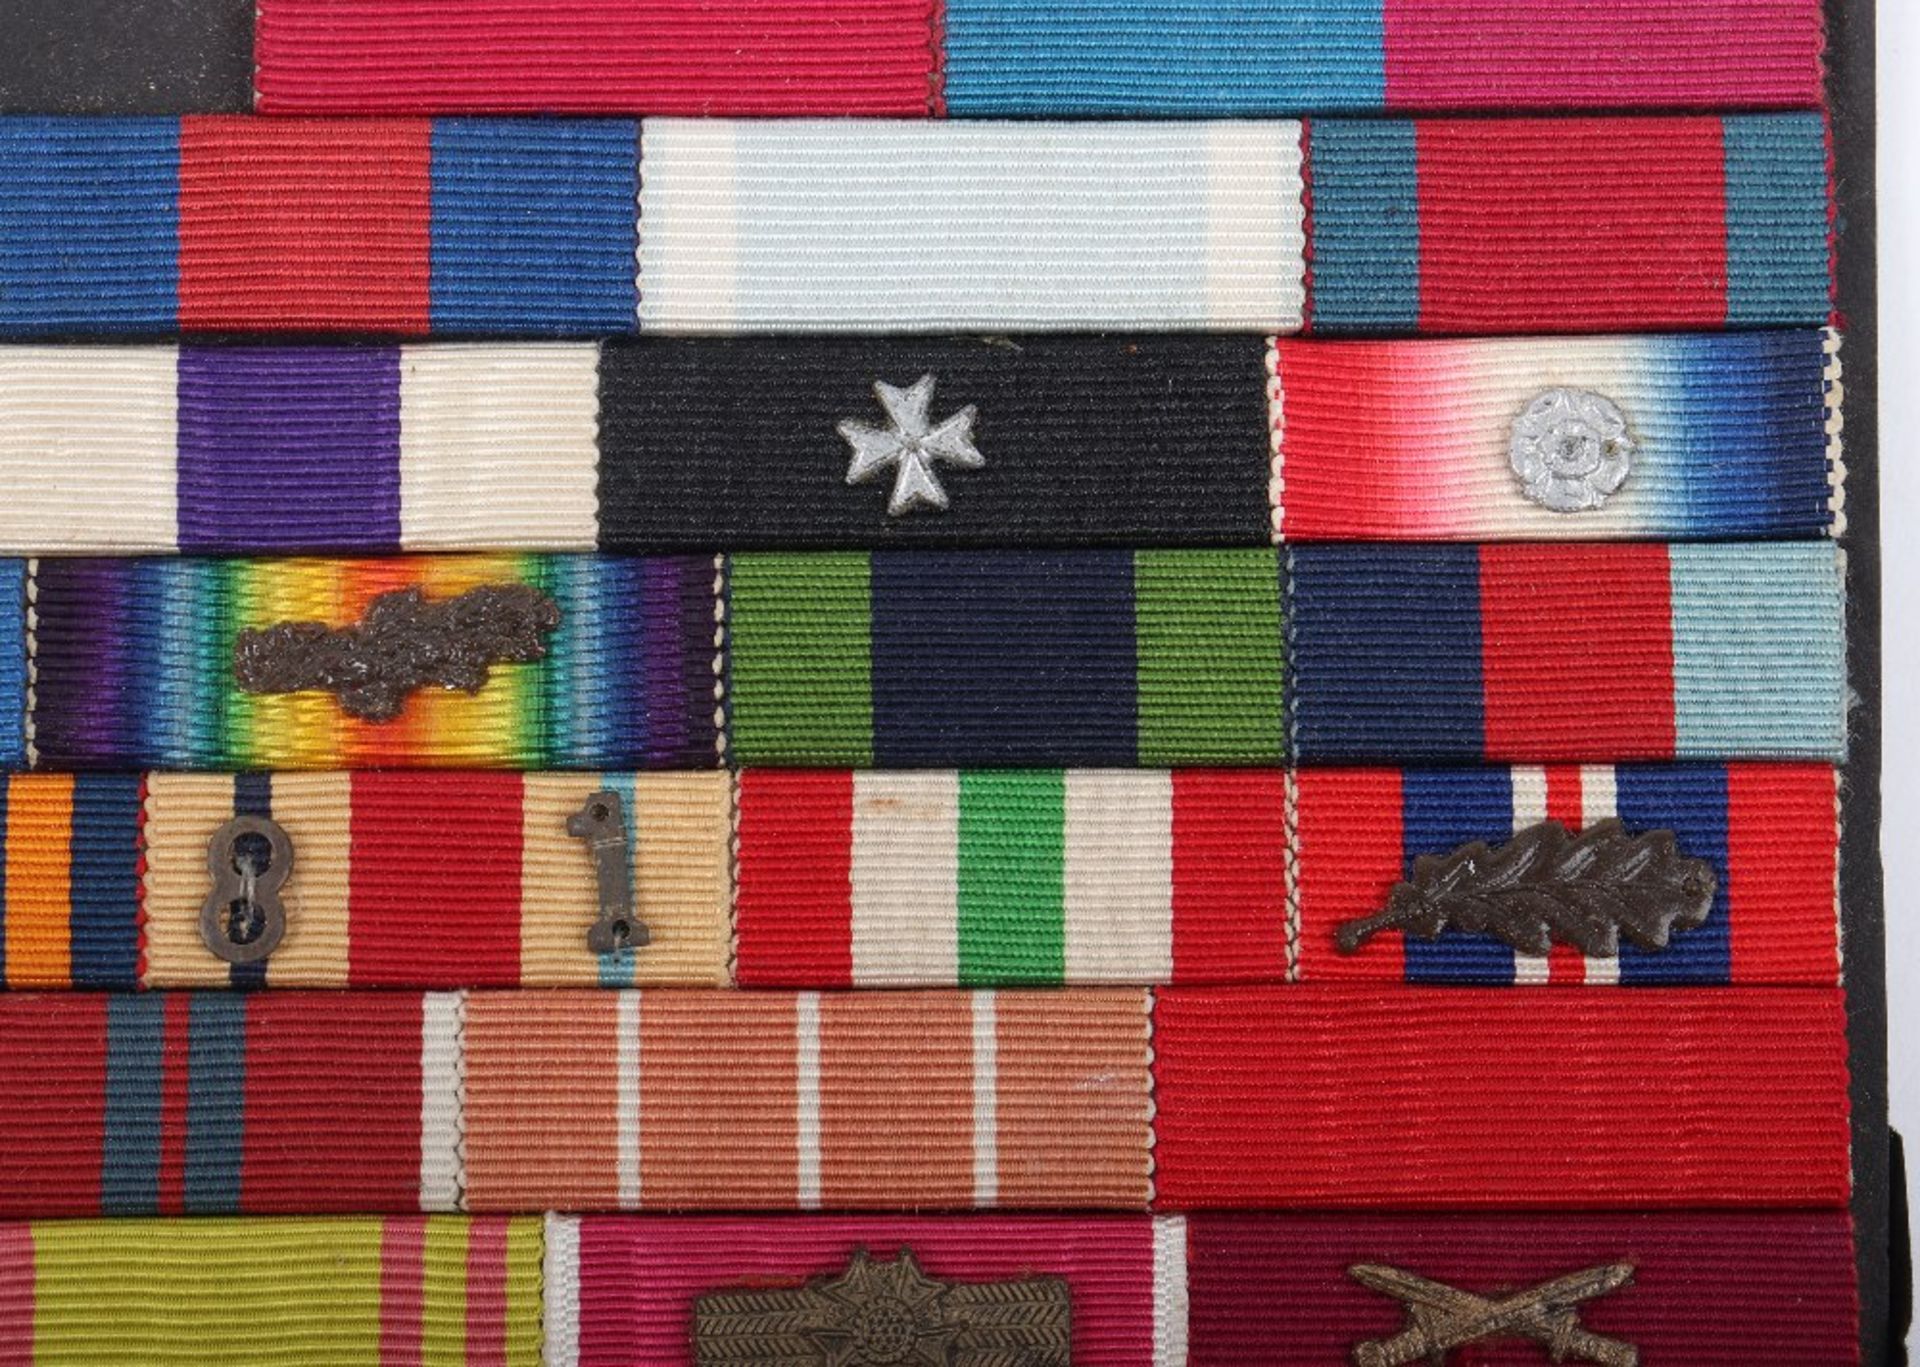 WW2 British Uniform Ribbon Bar with Foreign Awards - Image 4 of 4